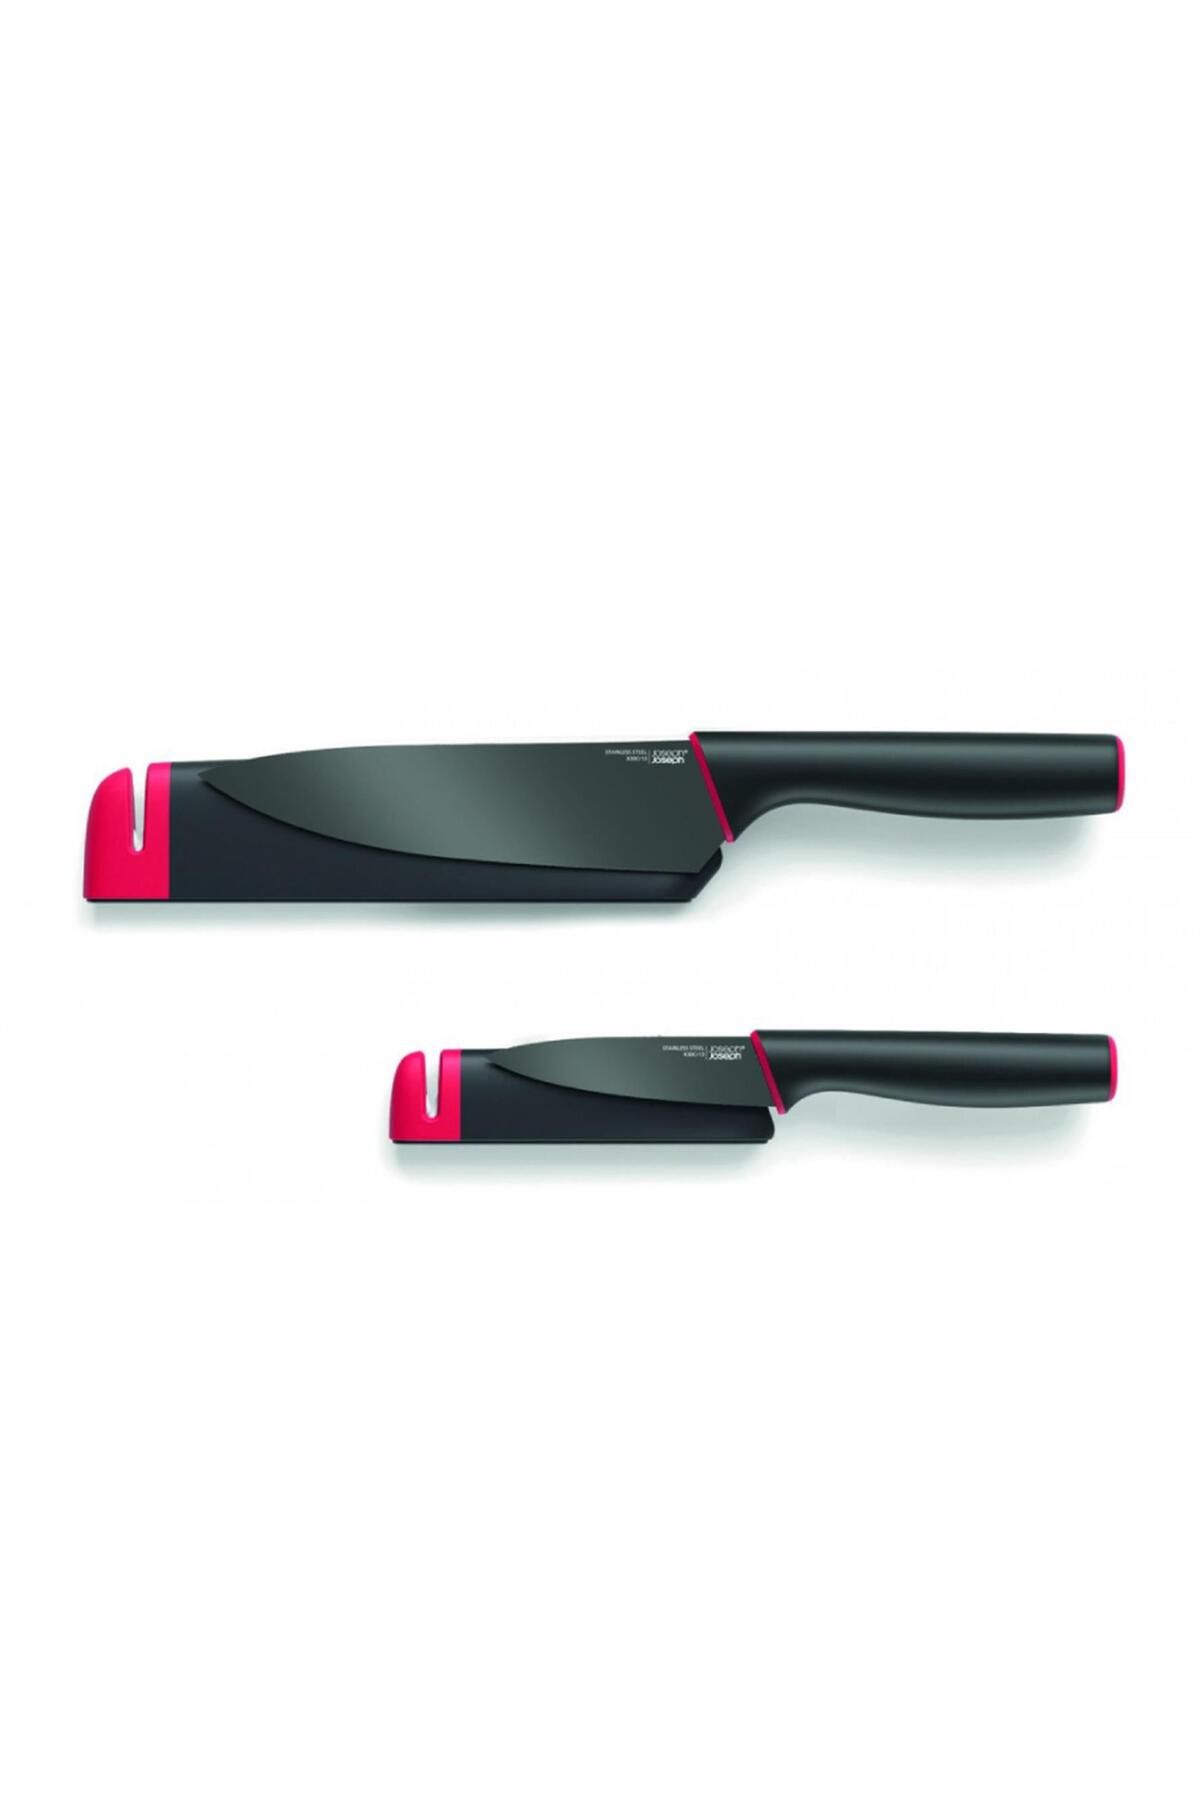 Slice&Sharpen İkili Bileyicili Bıçak Seti  Siyah / Kırmızı